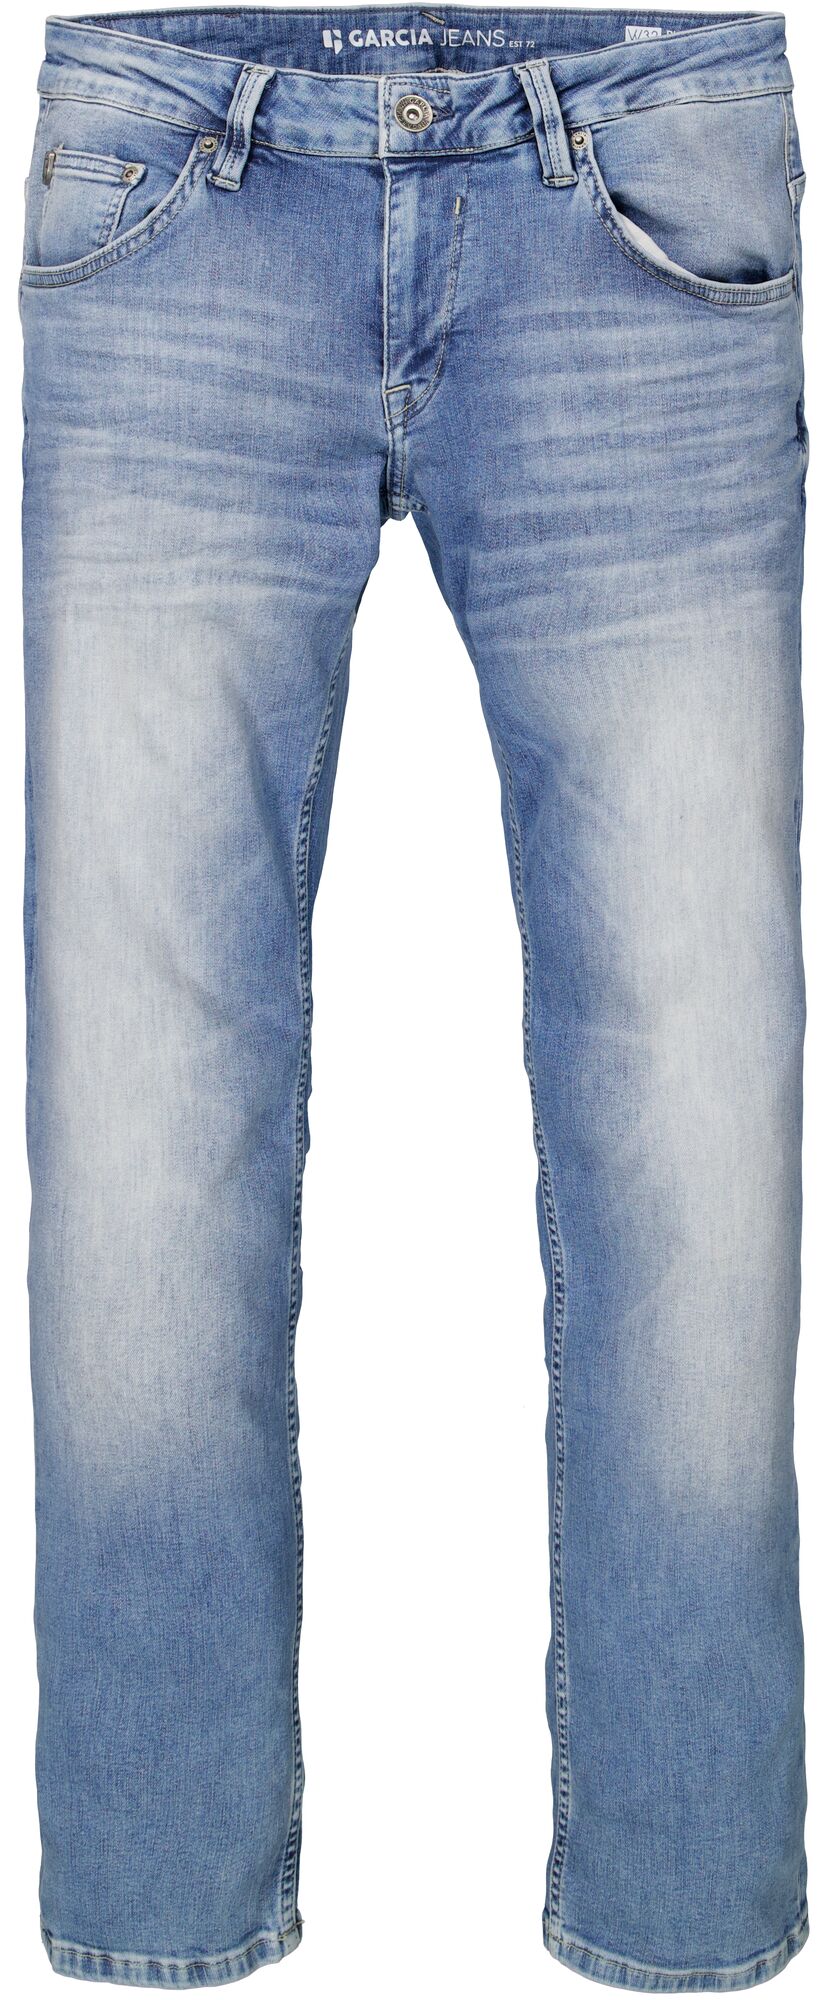 McKnight Garcia Brown Jeans - & Medium Used Russo Wash – -